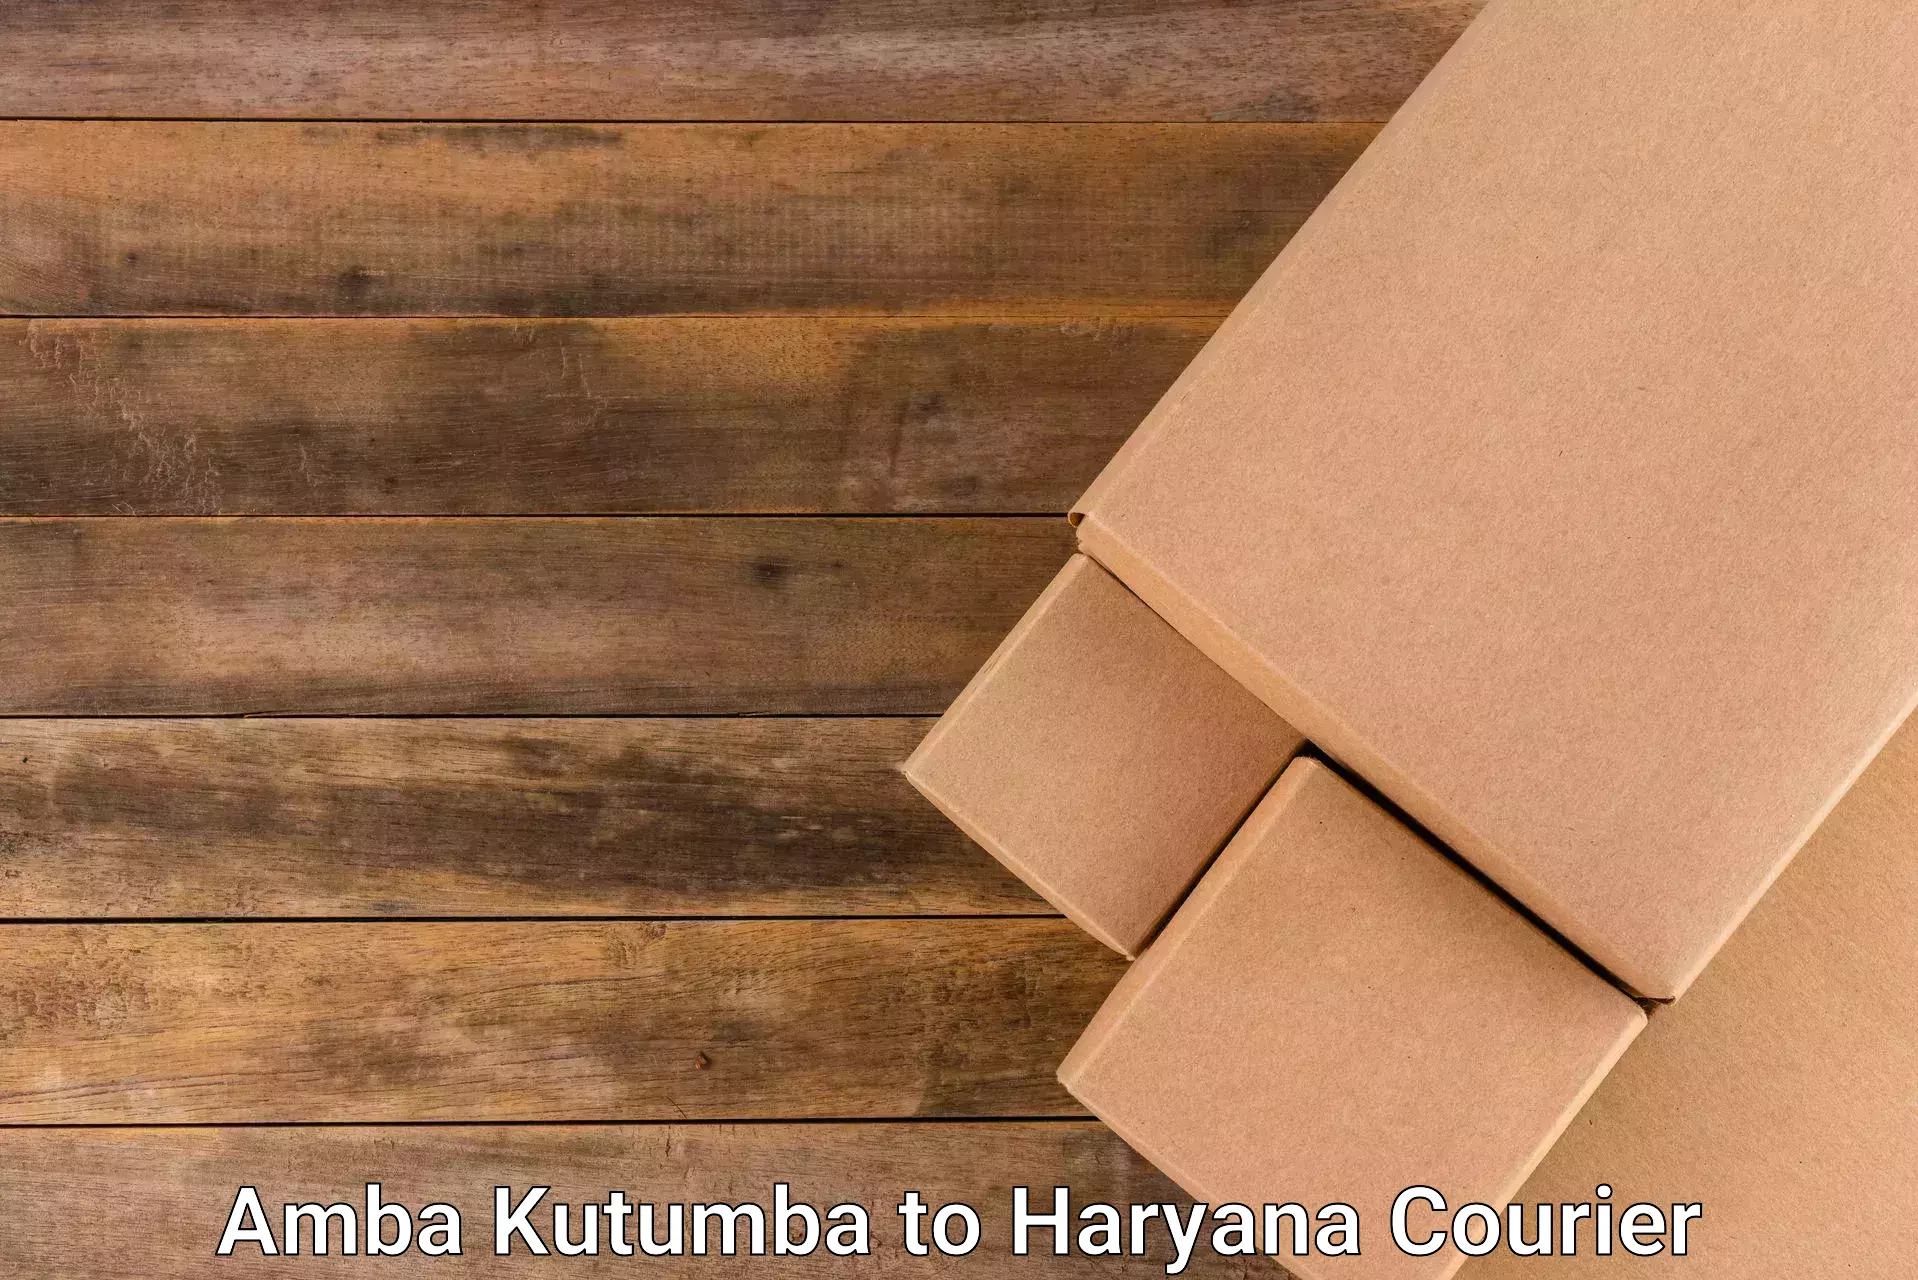 Business shipping needs Amba Kutumba to Haryana